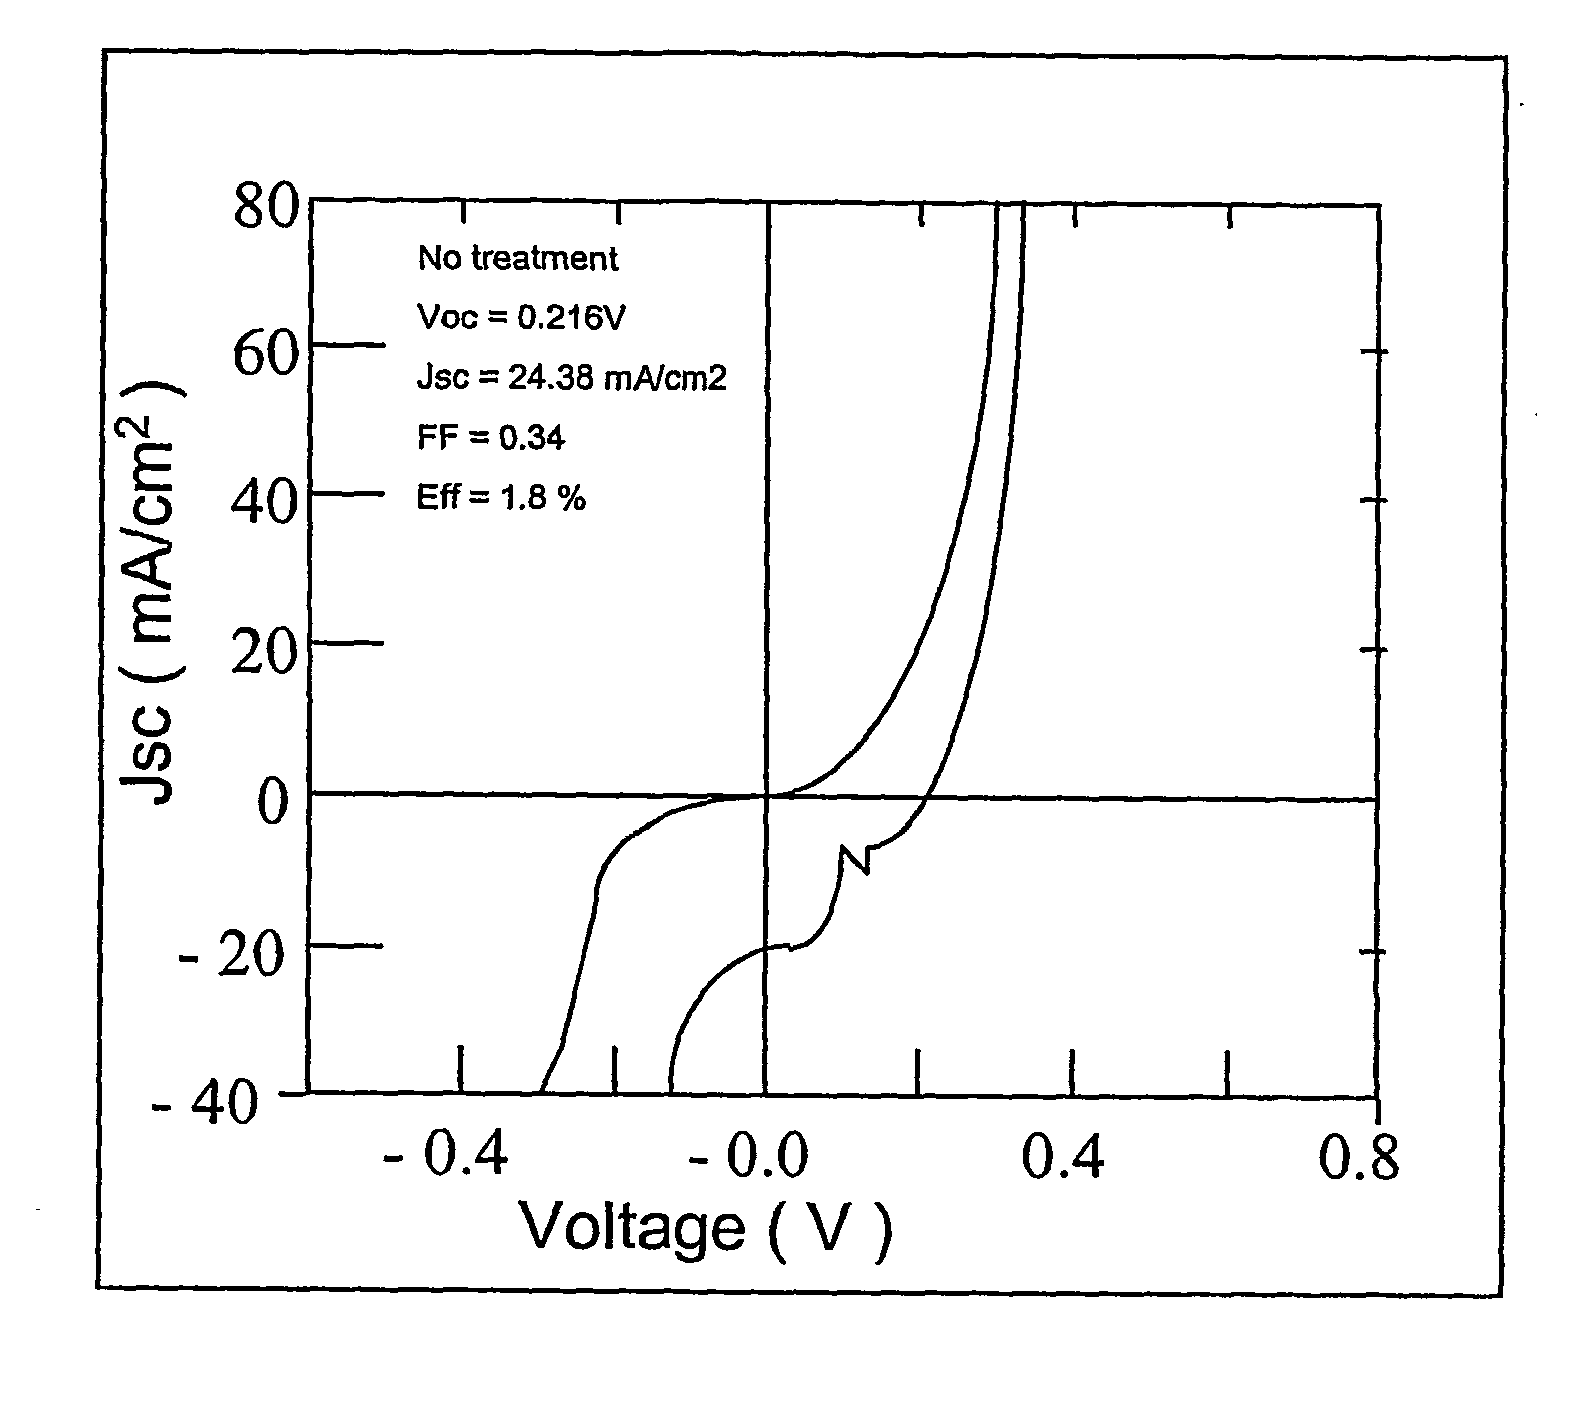 Zno/cu(inga)se2 solar cells prepared by vapor phase zn doping